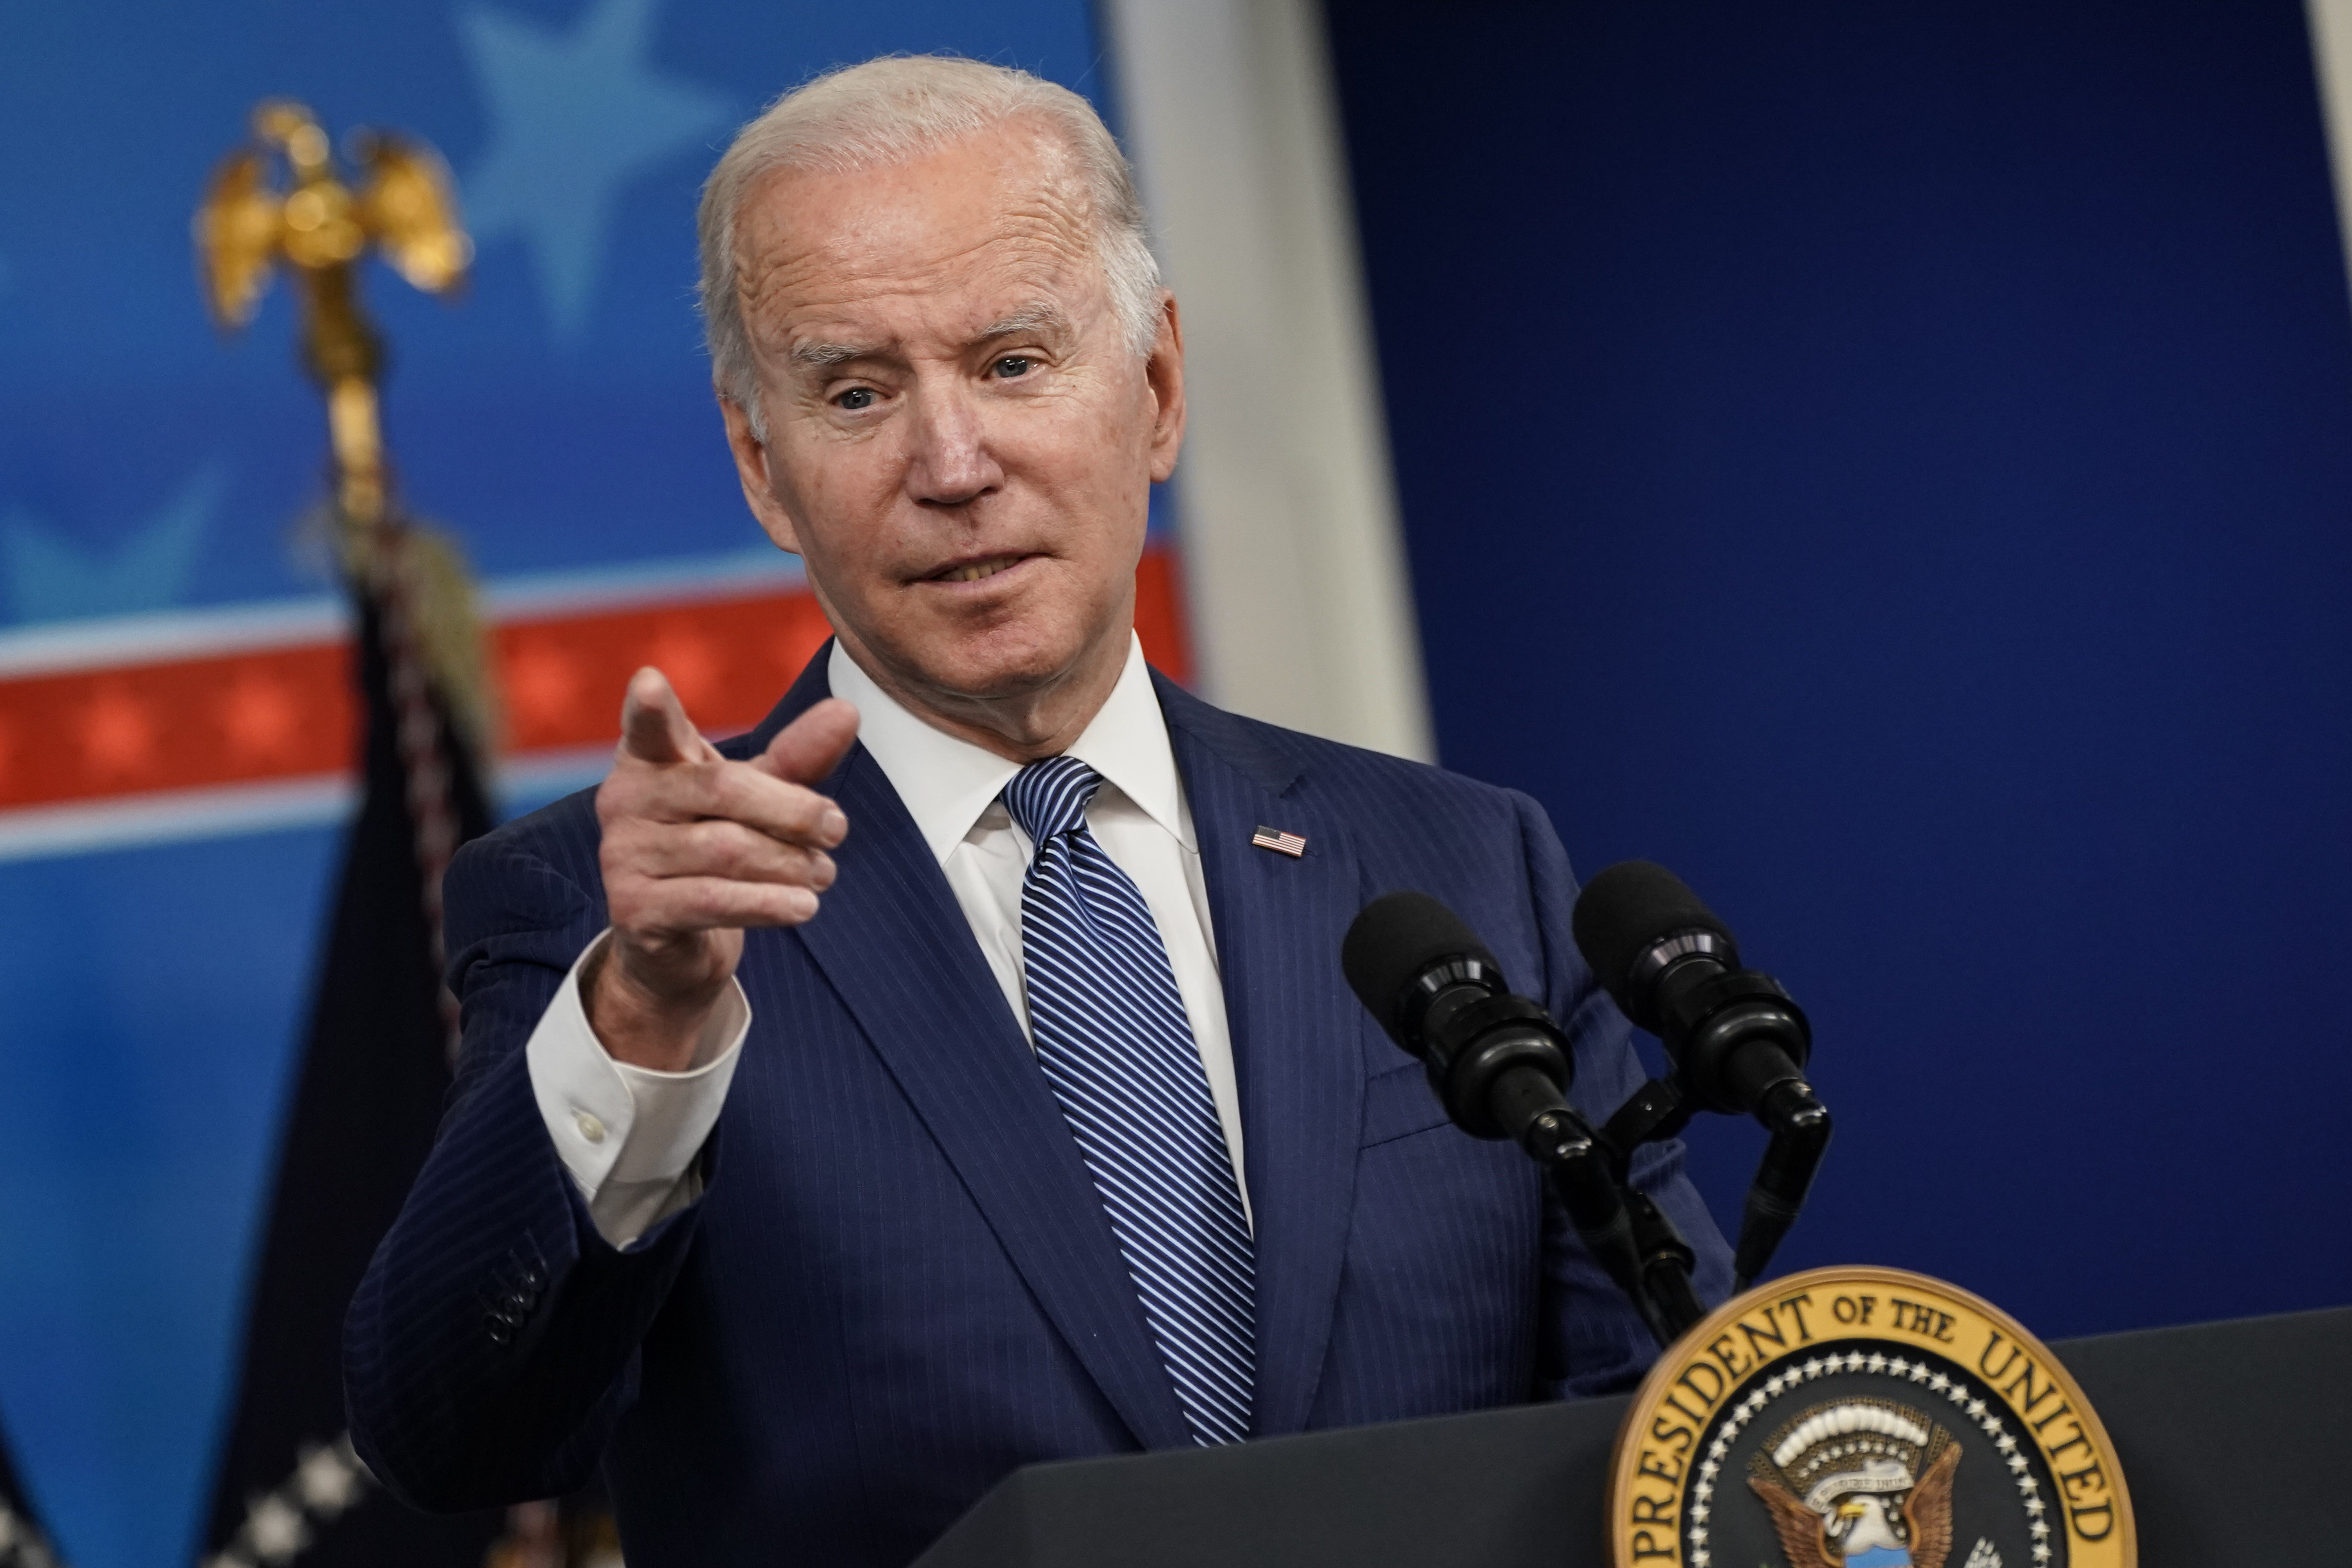 President Joe Biden speaks on US supply chains in Washington, DC on Wednesday, December 1.